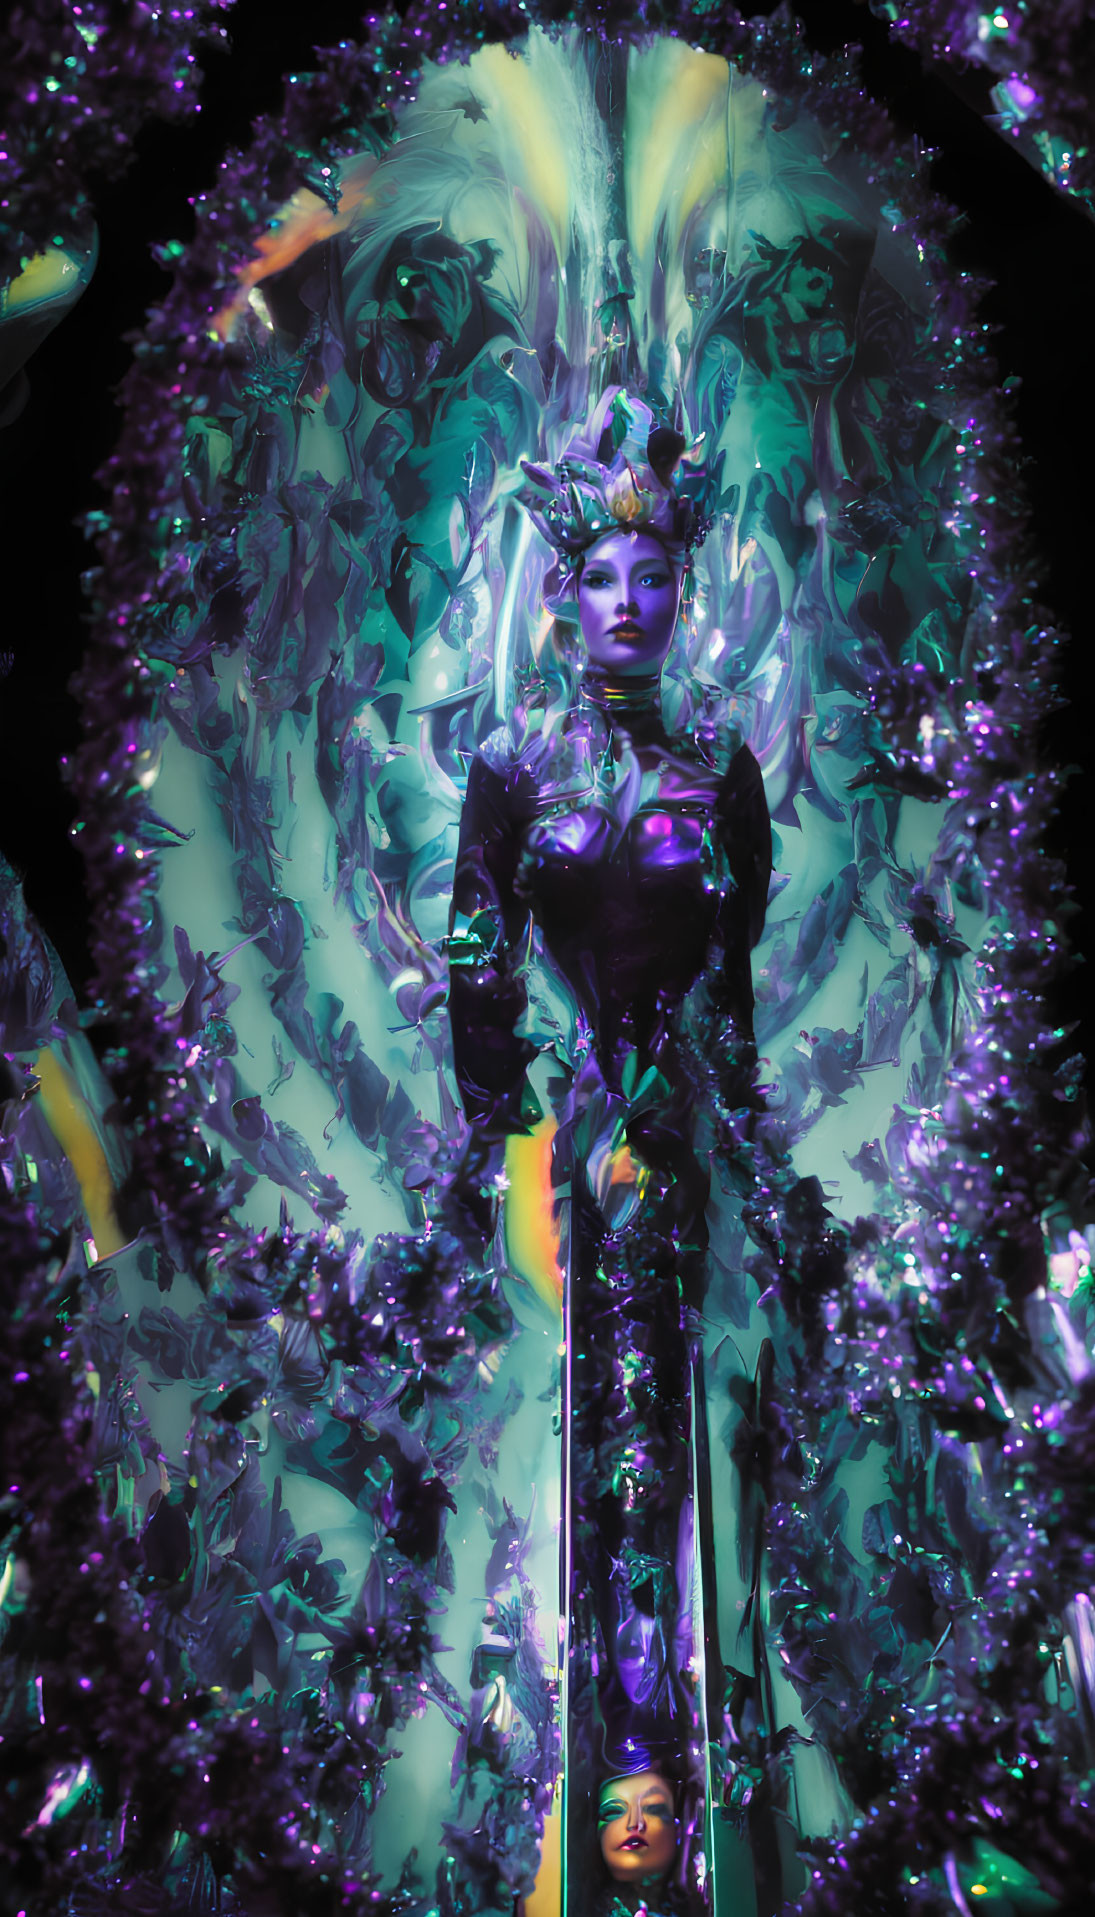 Regal figure in ornate armor amid luminous purple flora